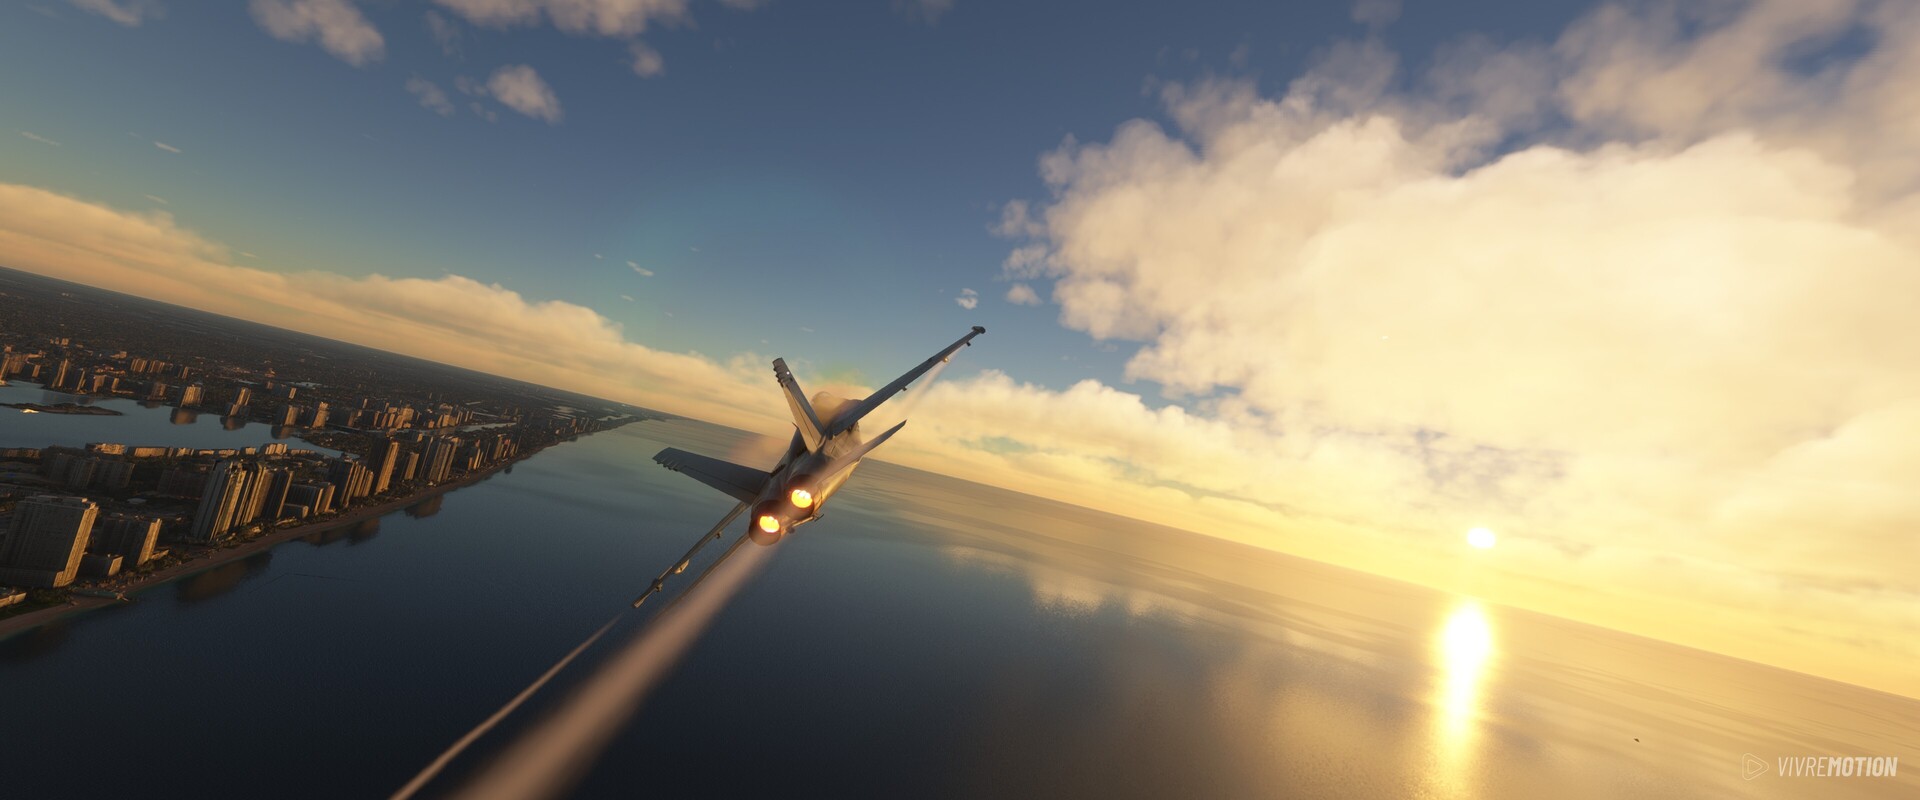 Miami Beach, Florida - Boeing F/A-18 Super Hornet - Microsoft Flight Simulator - VIVRE-MOTION